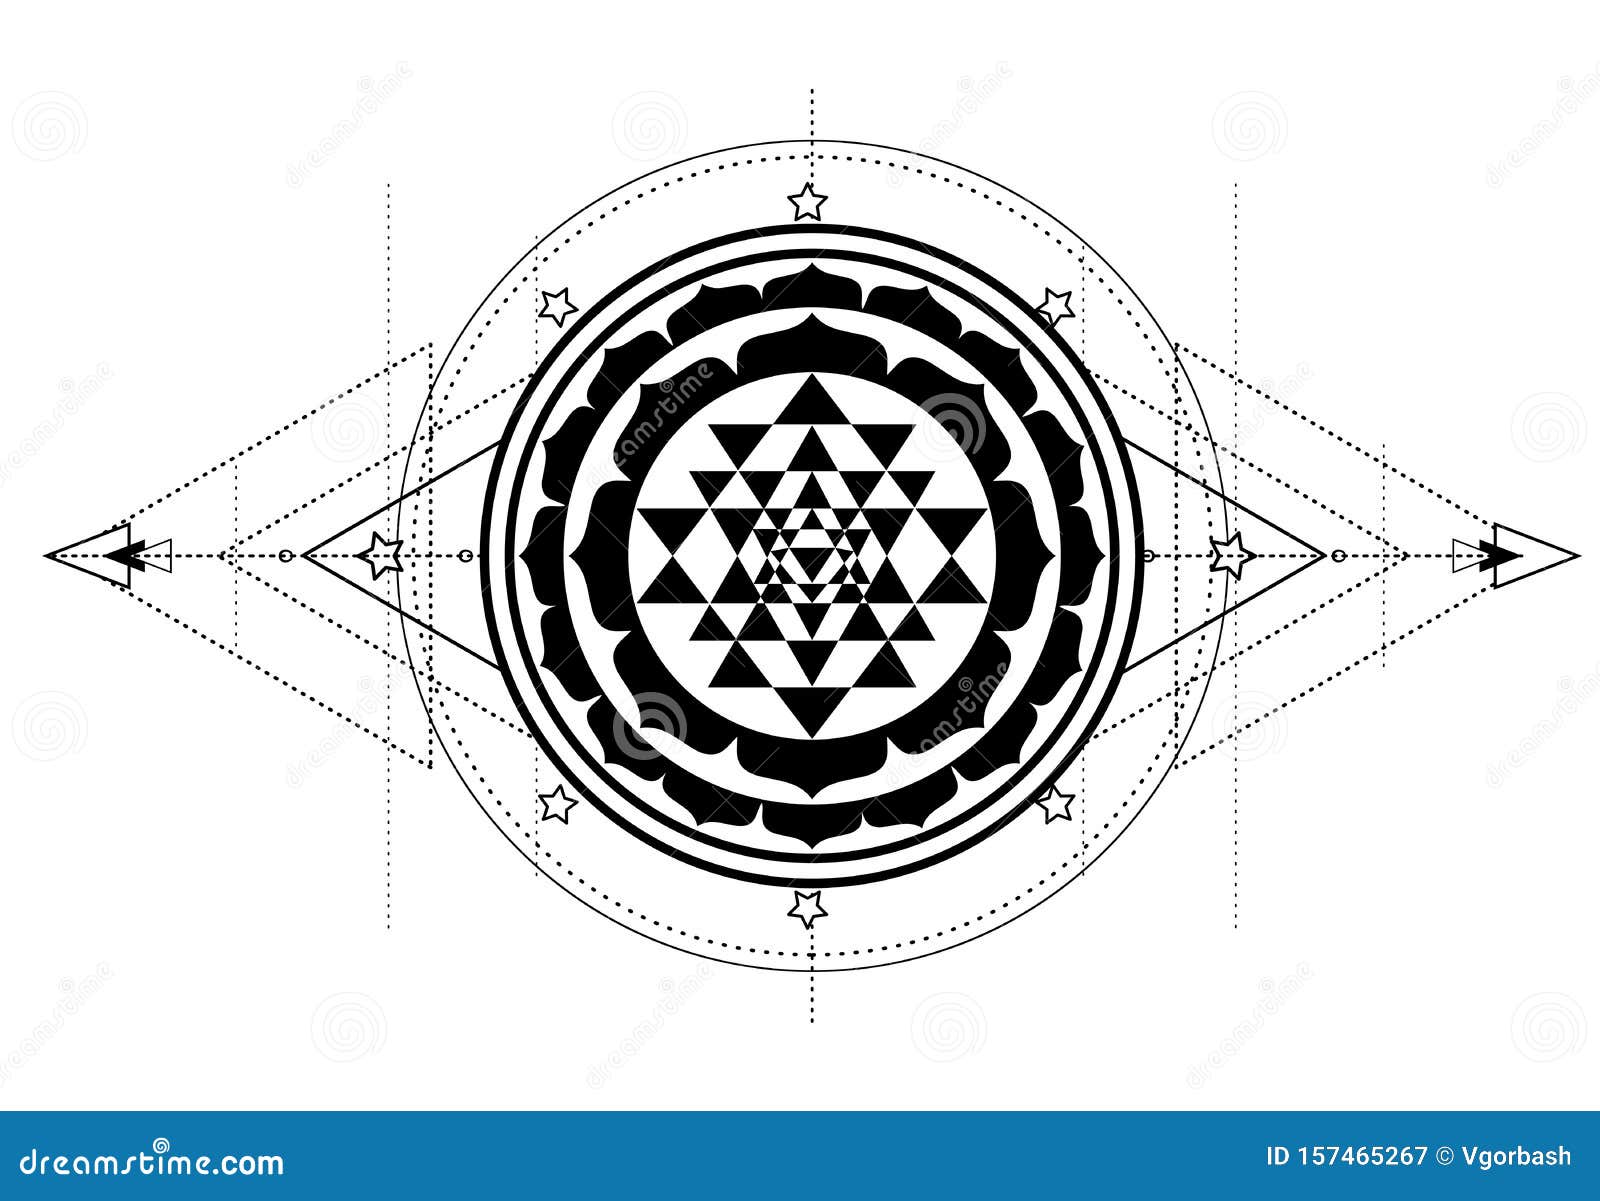 The Sri Yantra Or Sri Chakra Form Of Mystical Diagram Shri Vidya School Of Hindu Tantra Symbol Sacred Geometry Vector Design Stock Vector Illustration Of Meditation Healing 157465267